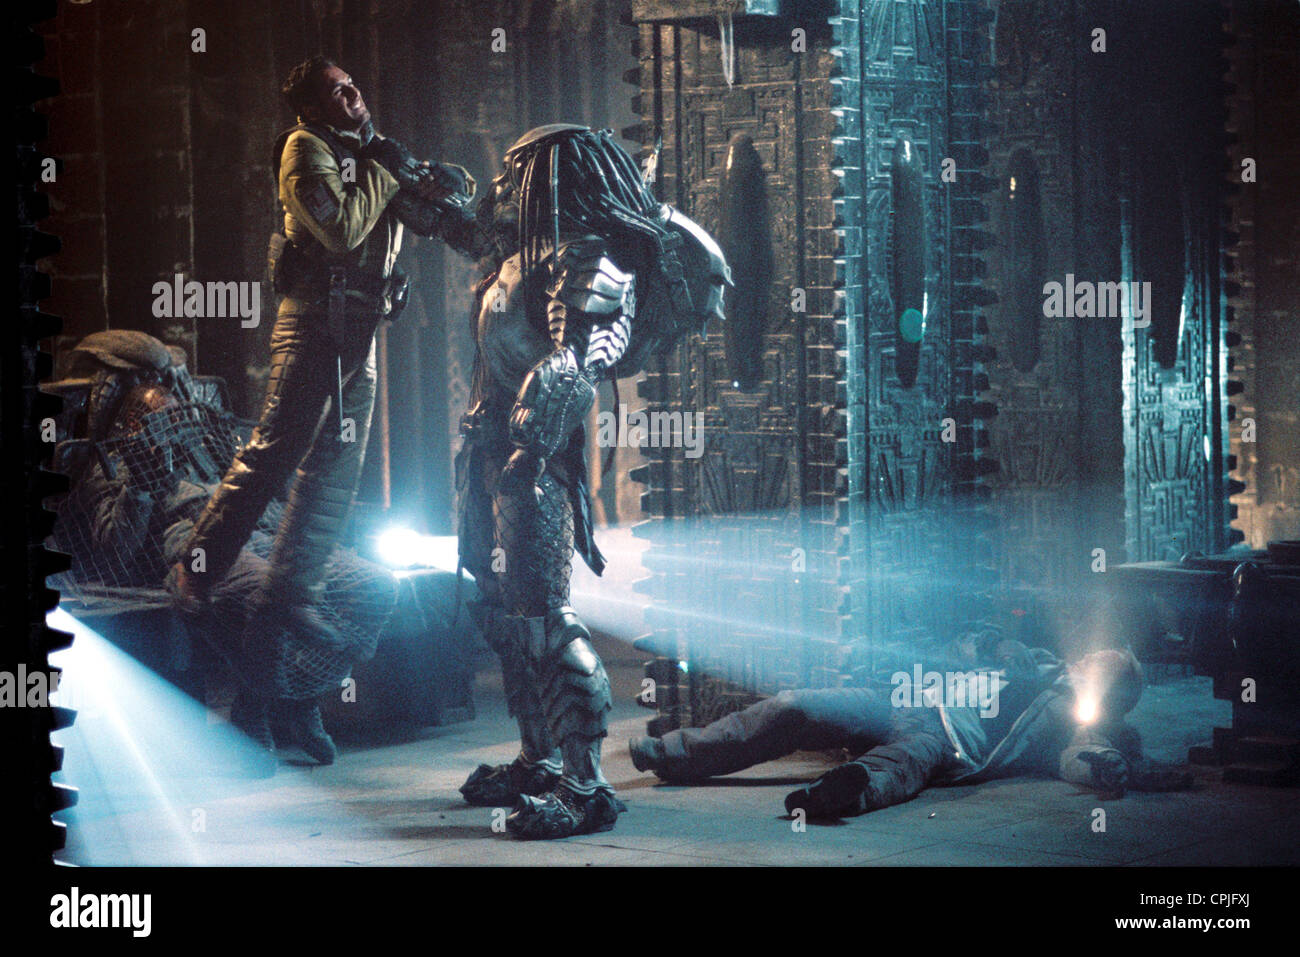 Alien vs predator requiem hi-res stock photography and images - Alamy